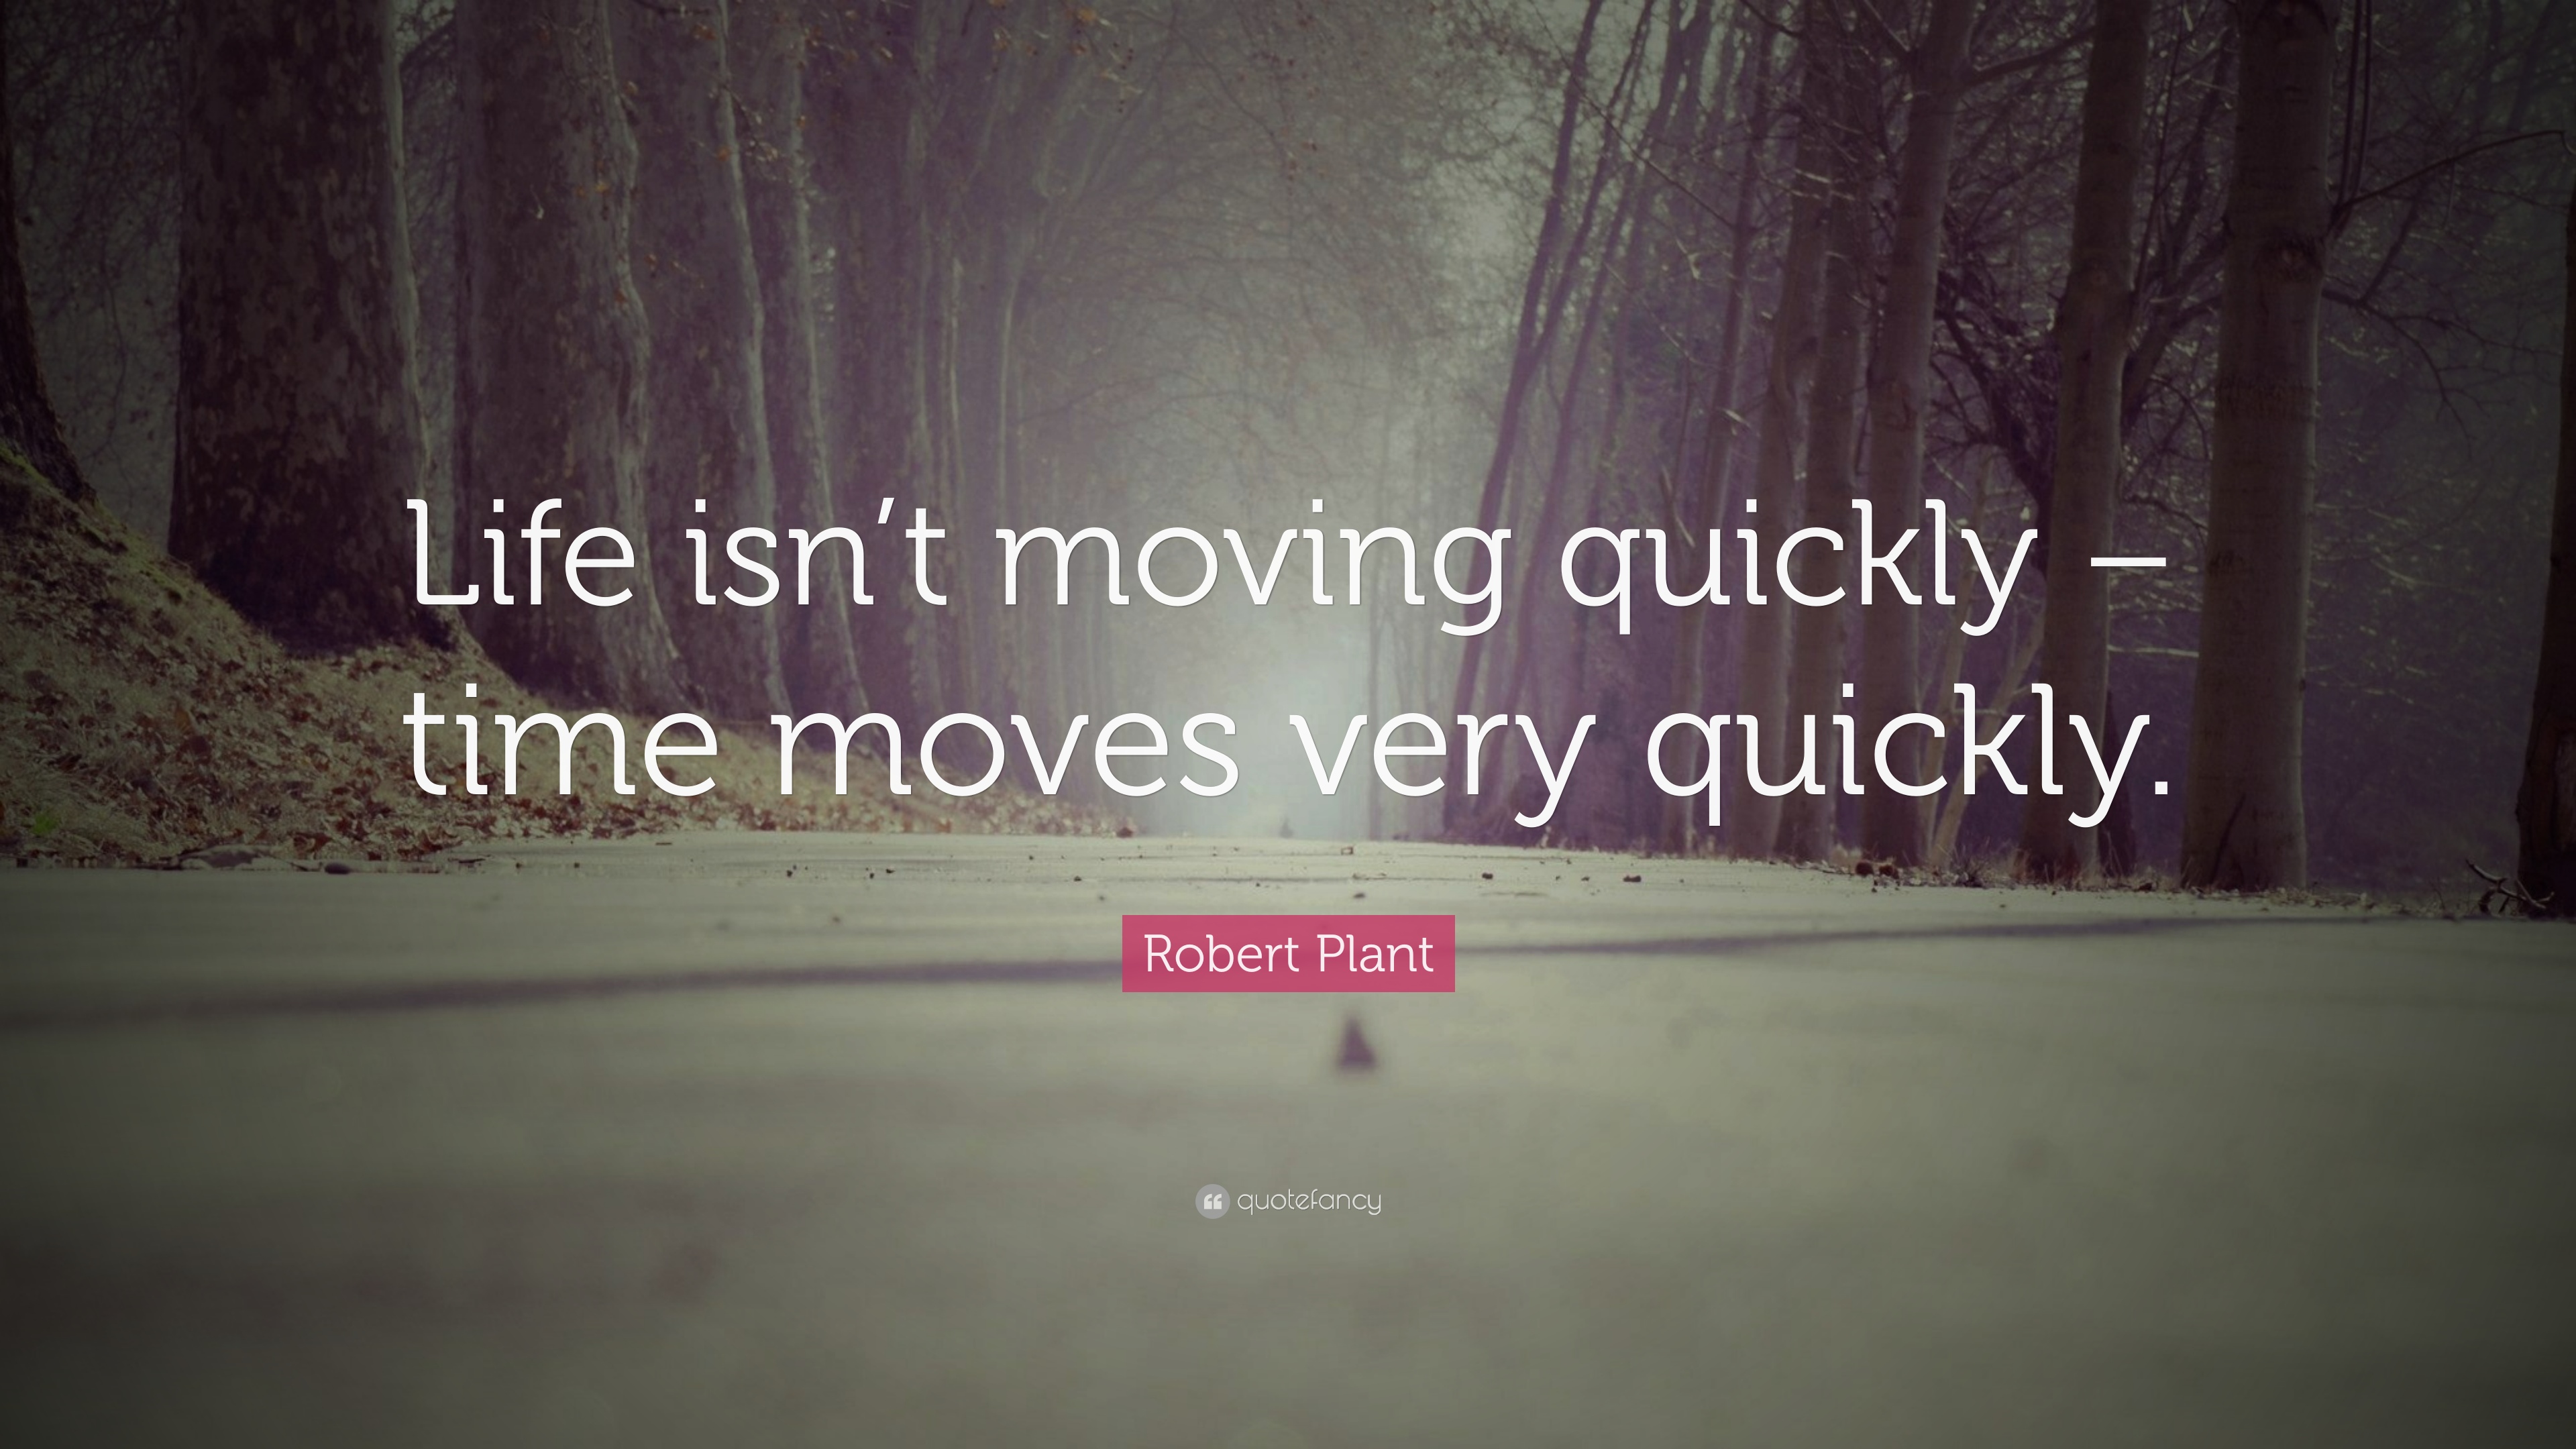 6 Inspirational Robert Plant Quotes